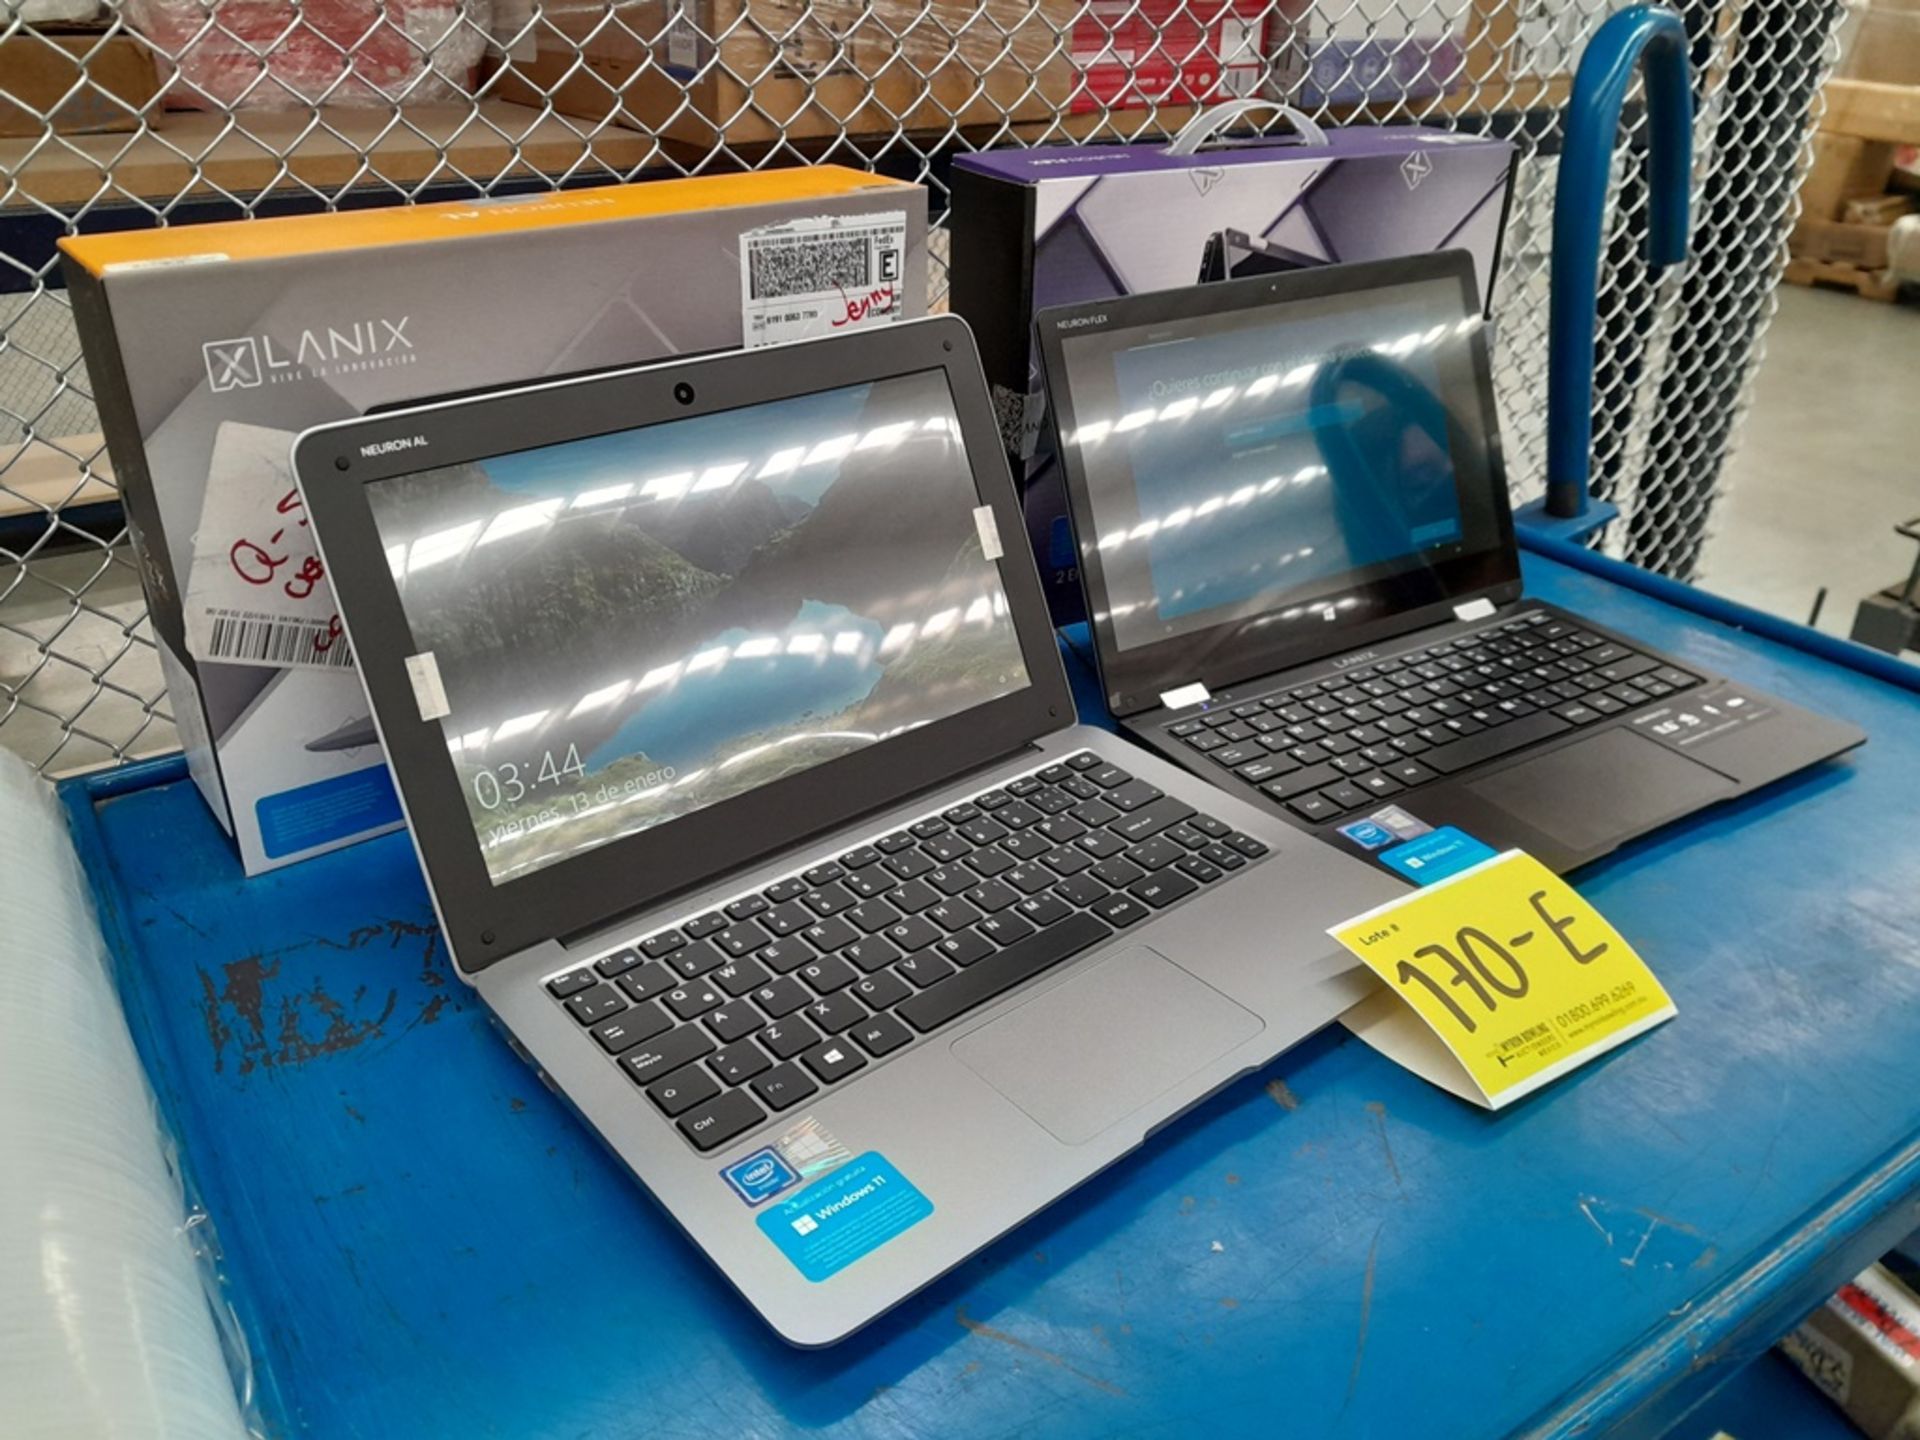 Lote de 2 Laptops contiene: 1 Laptop Marca LANIX, Modelo NEURON AL, Serie ND, Procesador INTEL CELE - Image 8 of 16